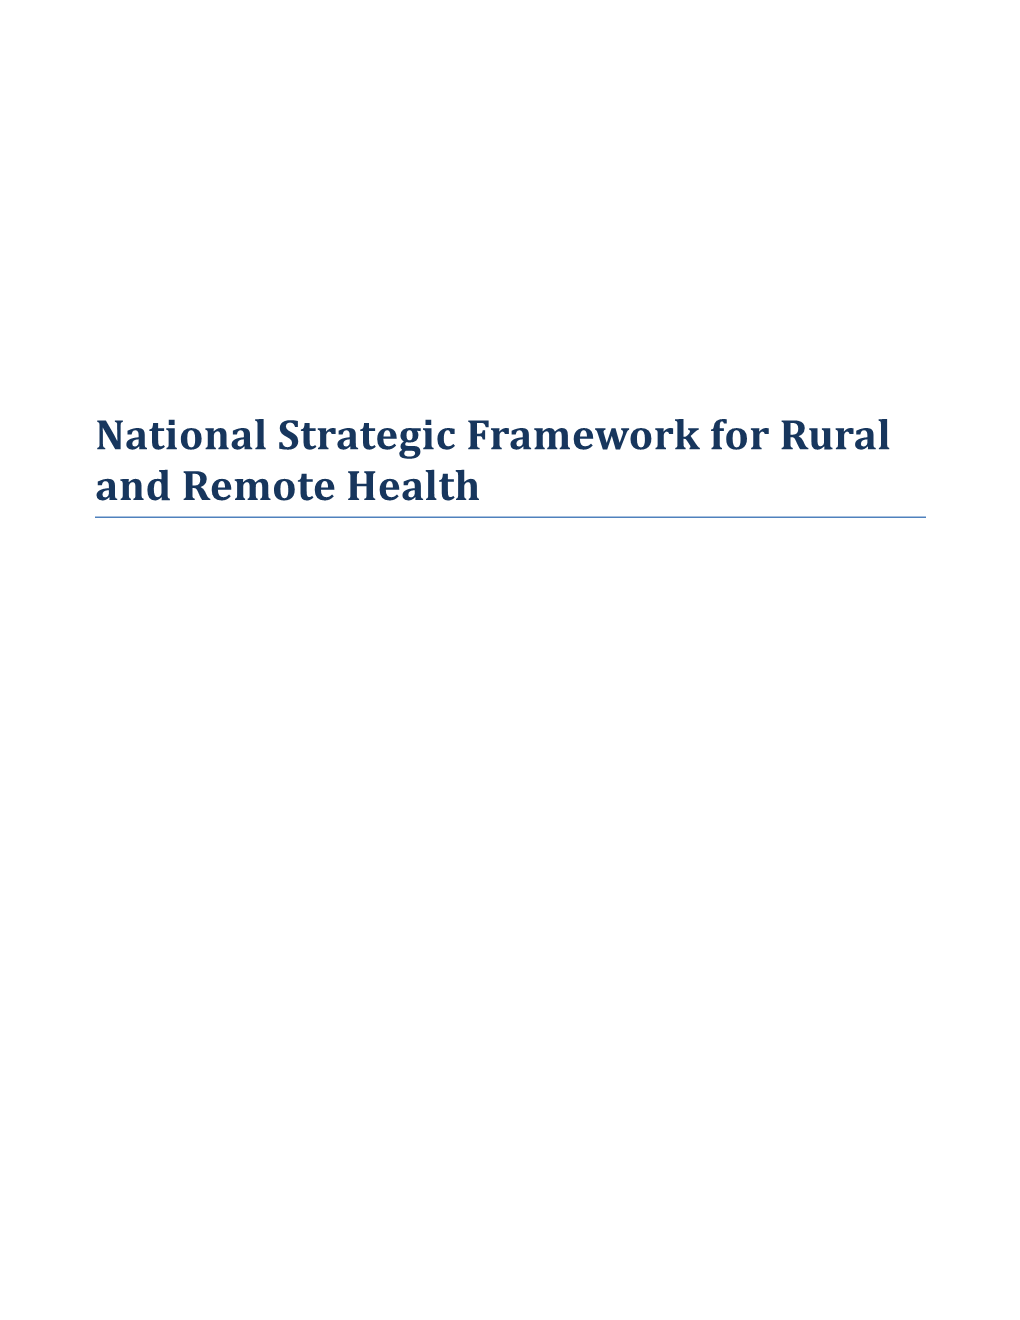 National Strategic Framework for Rural and Remote Health